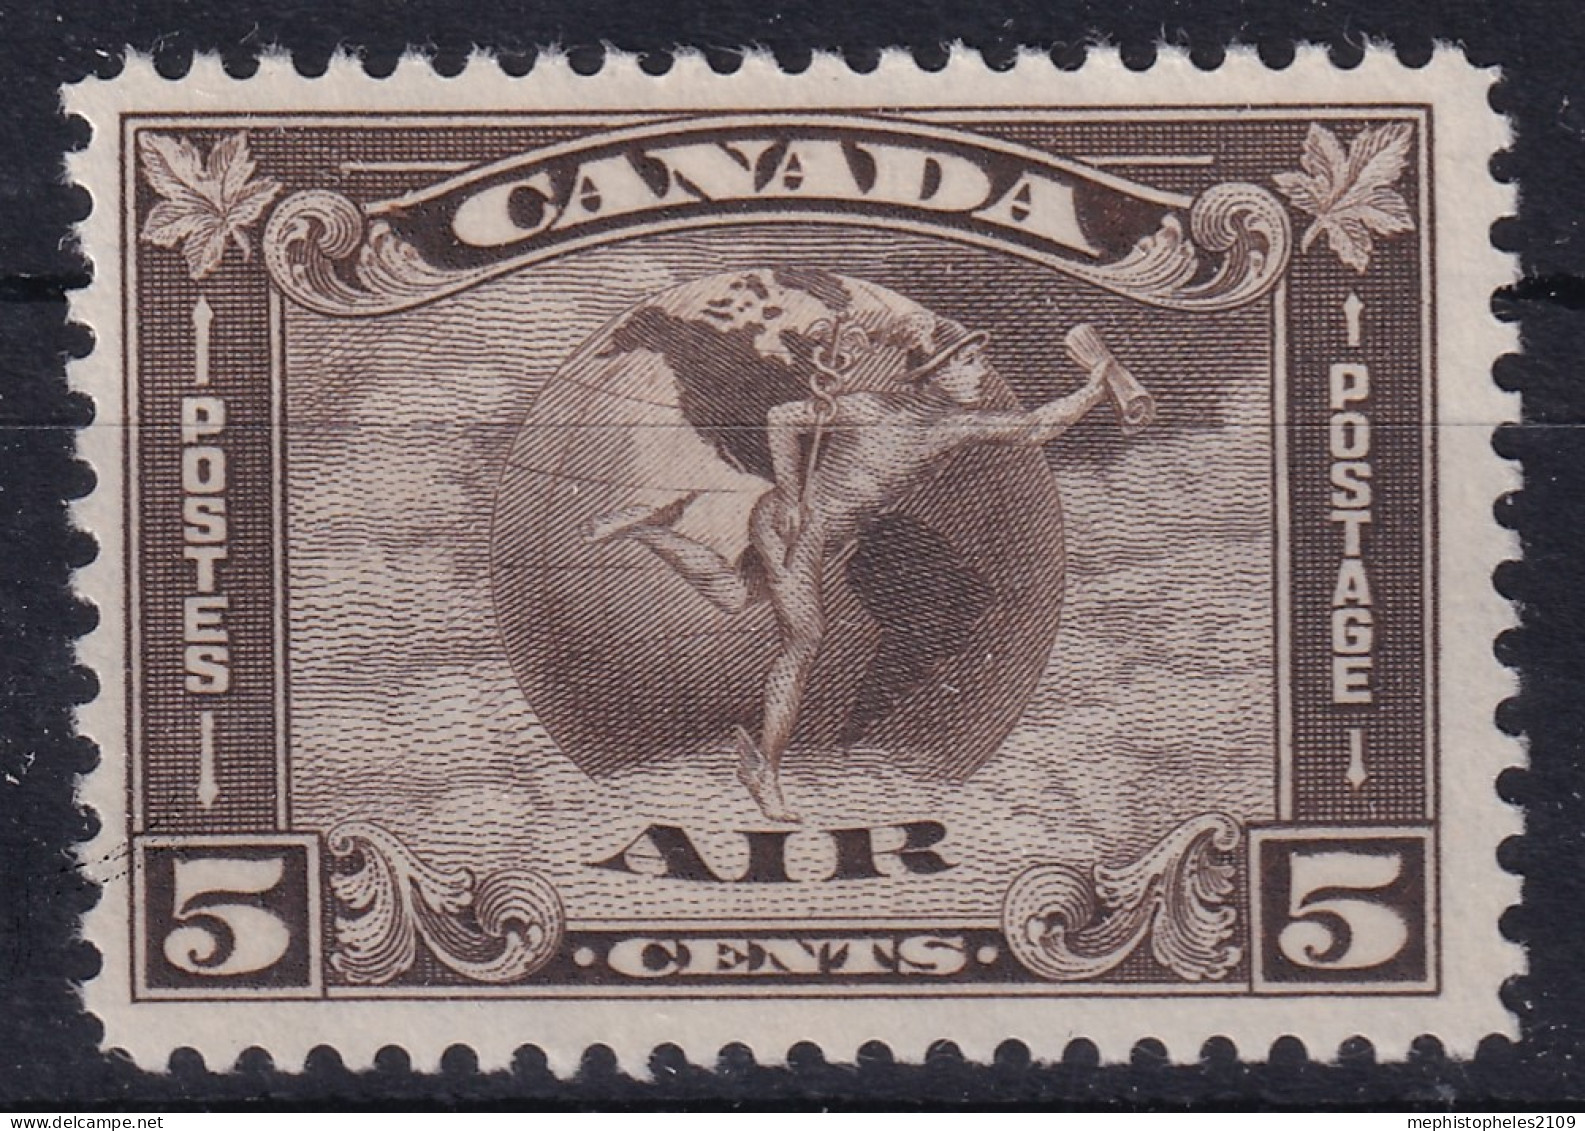 CANADA 1930 - MNH - Sc# C2 - Air Mail - Posta Aerea